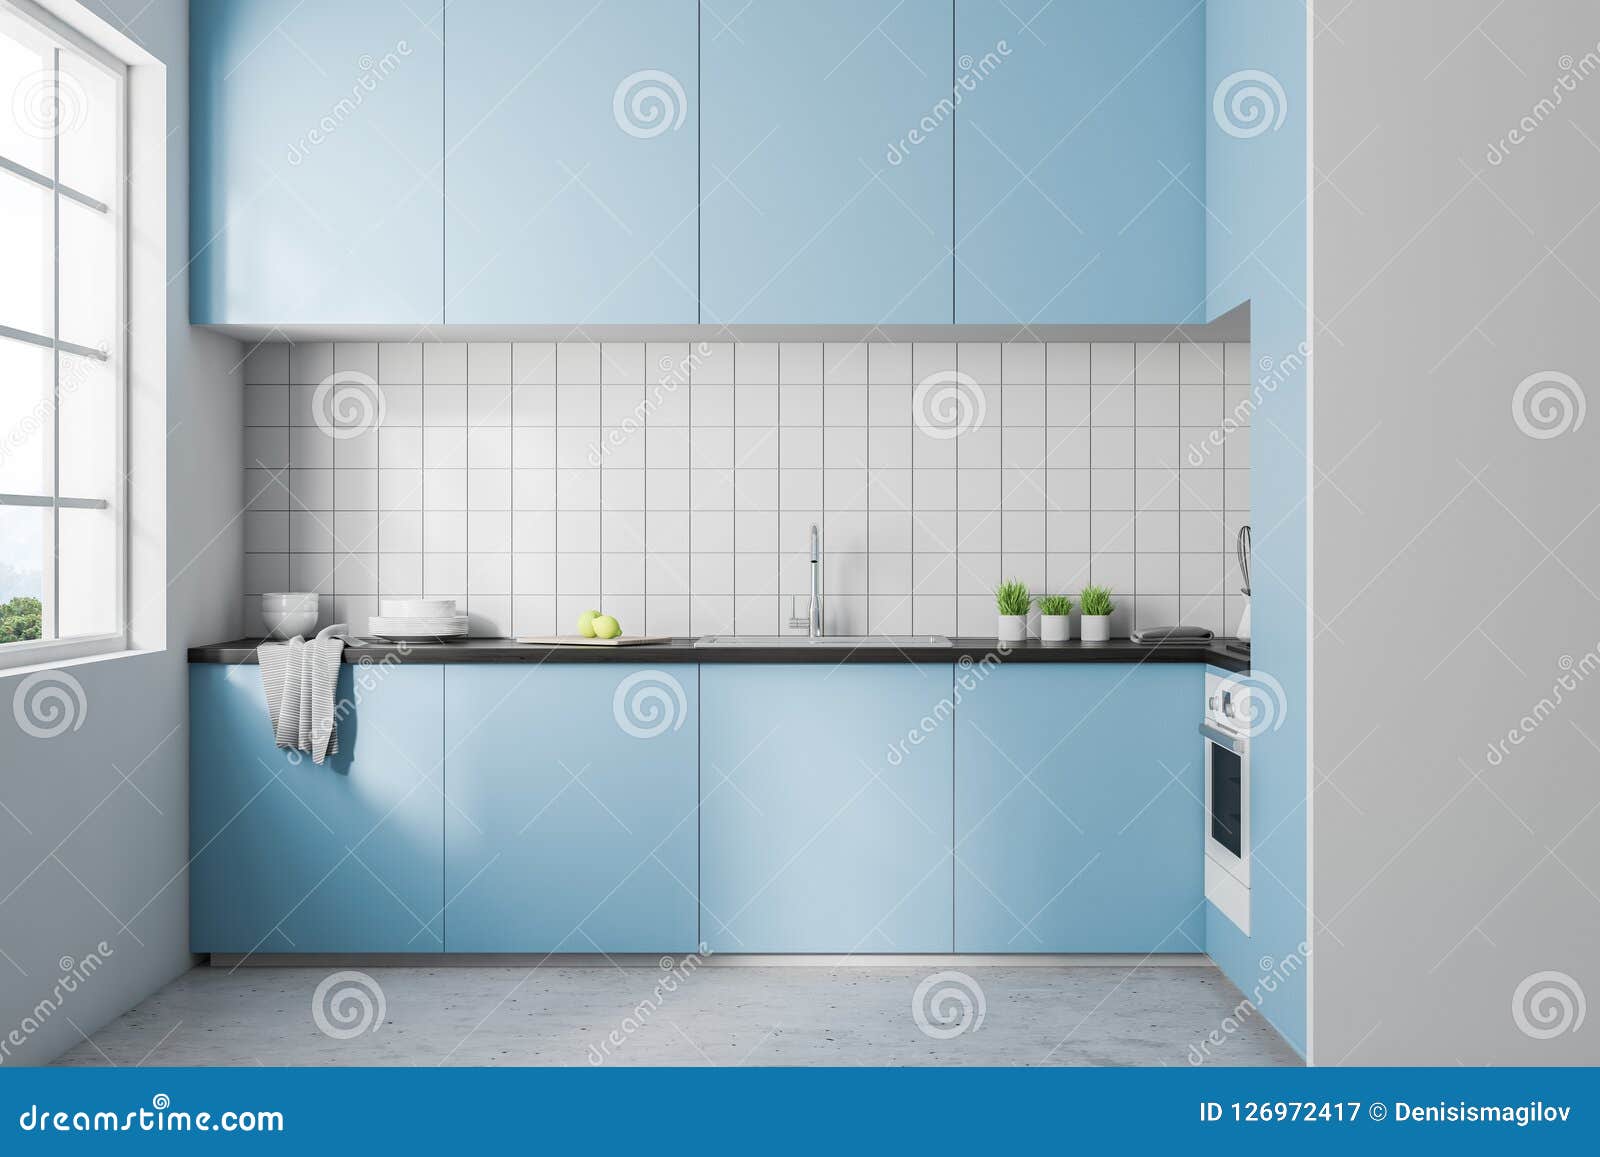 White Tile Kitchen Interior Blue Countertops Stock Illustration